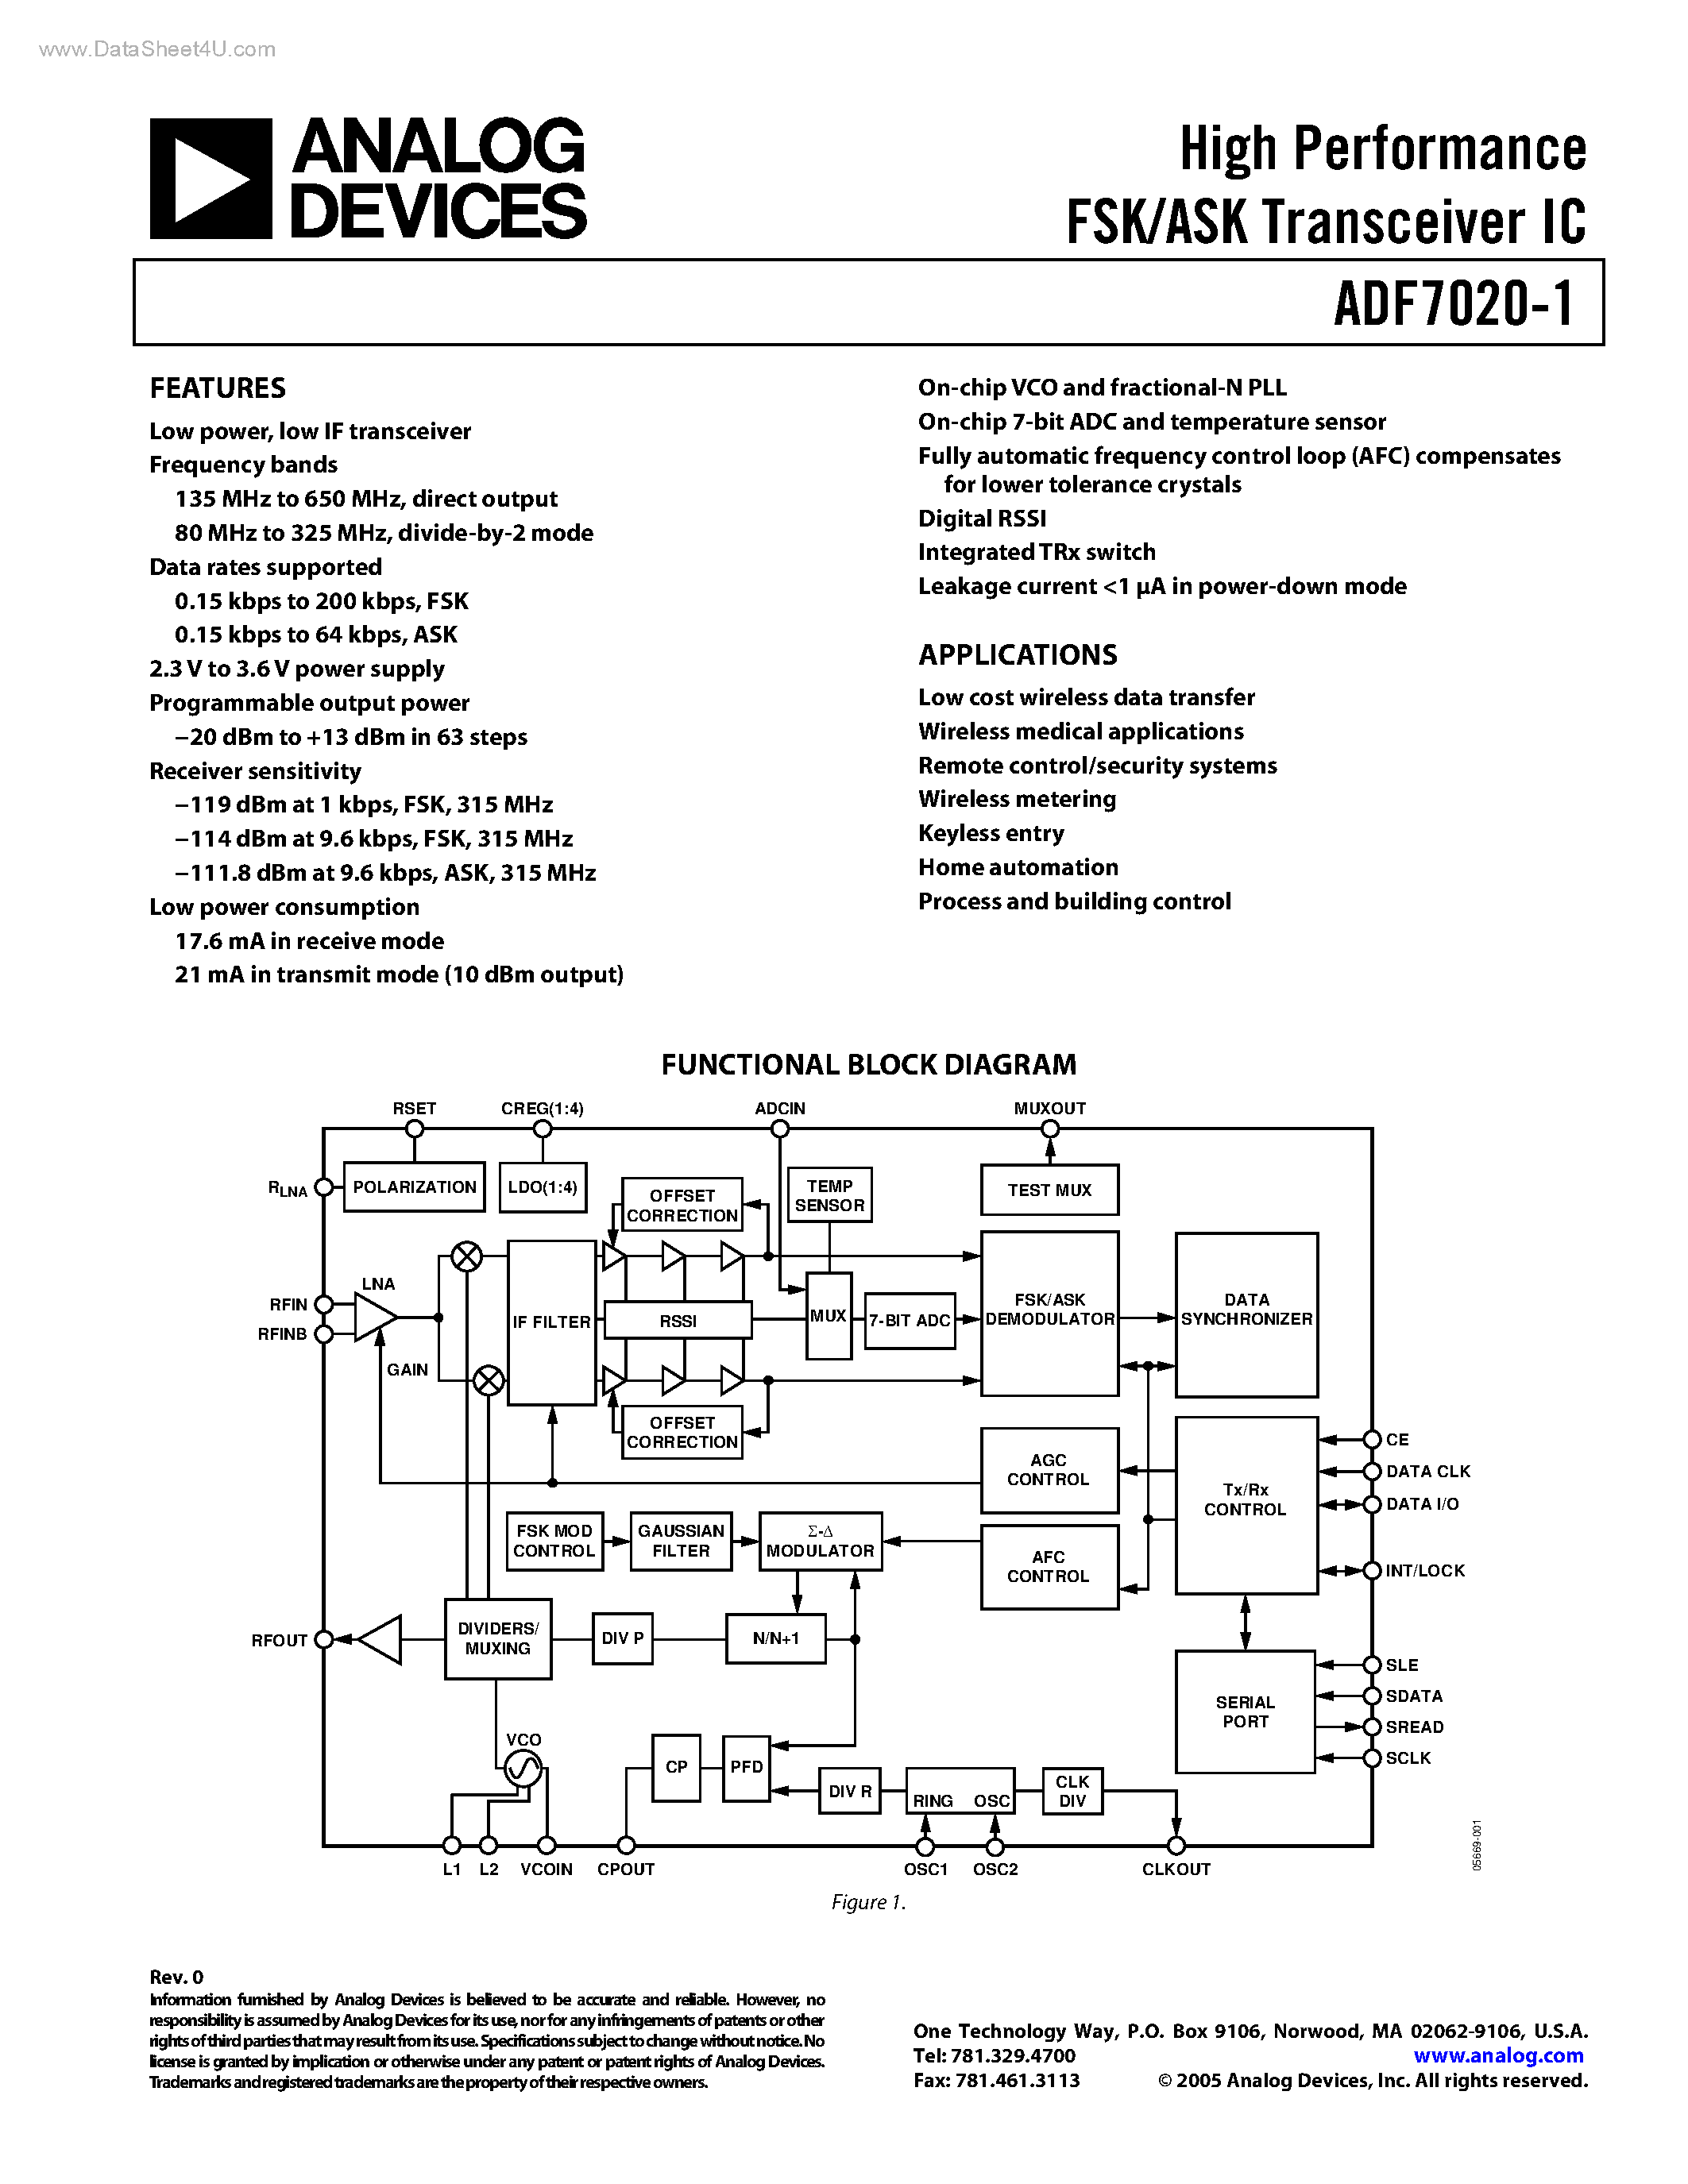 Даташит ADF7020-1 - High Performance FSK/ASK Transceiver IC страница 1